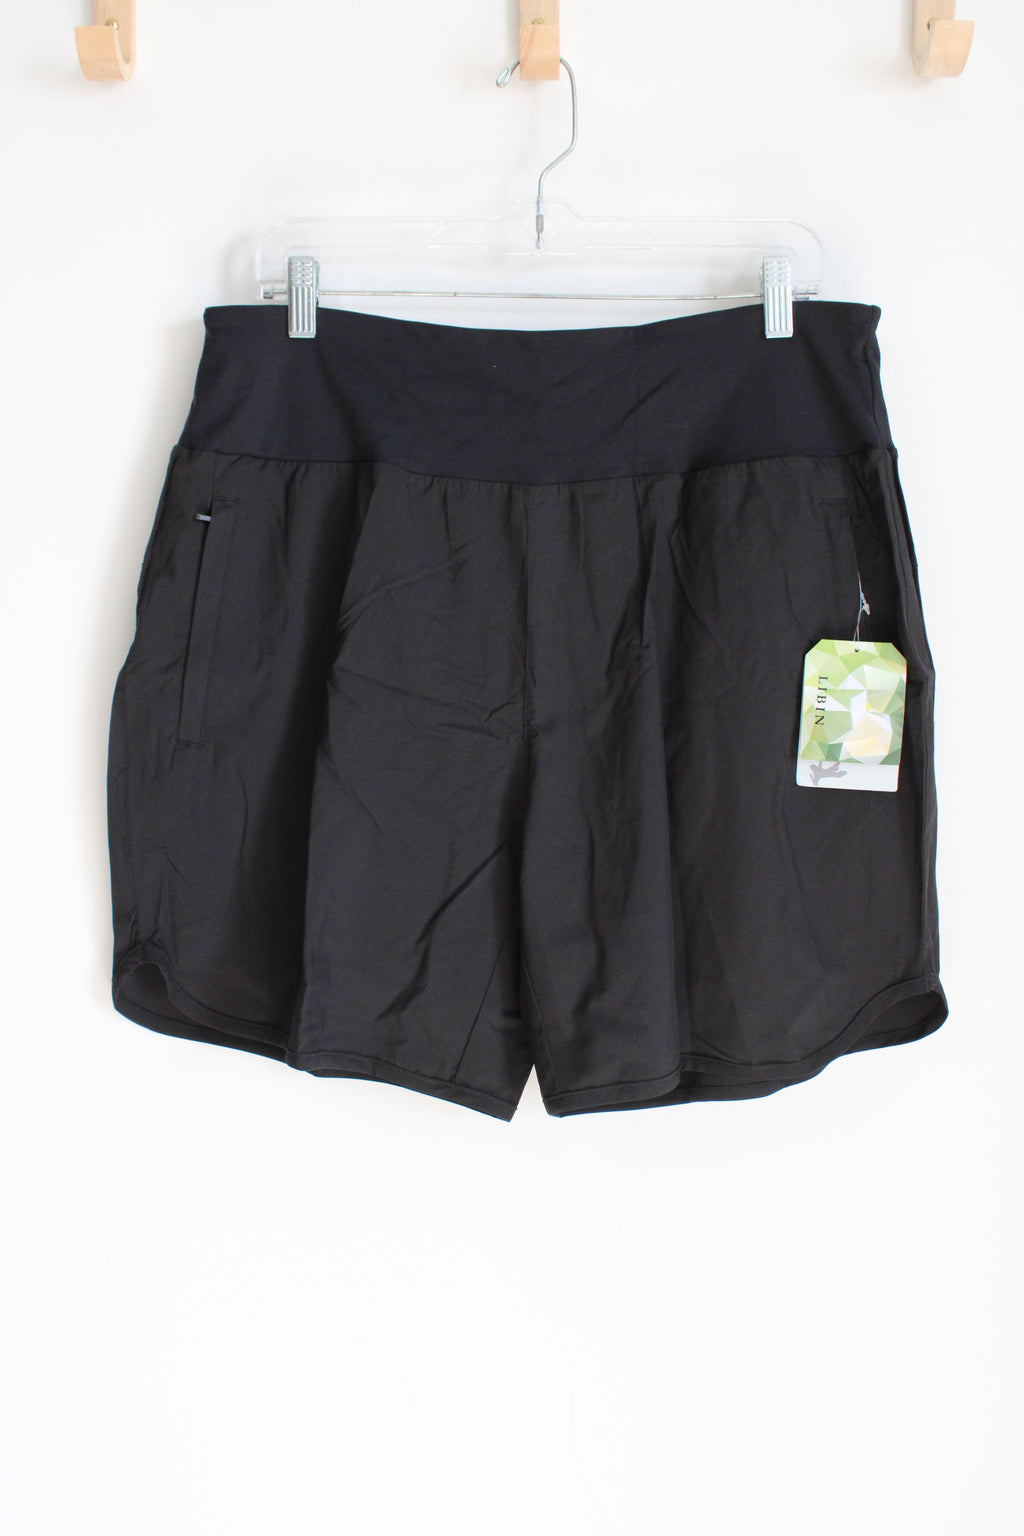 NEW Libin Black Athletic Lined Shorts | XL